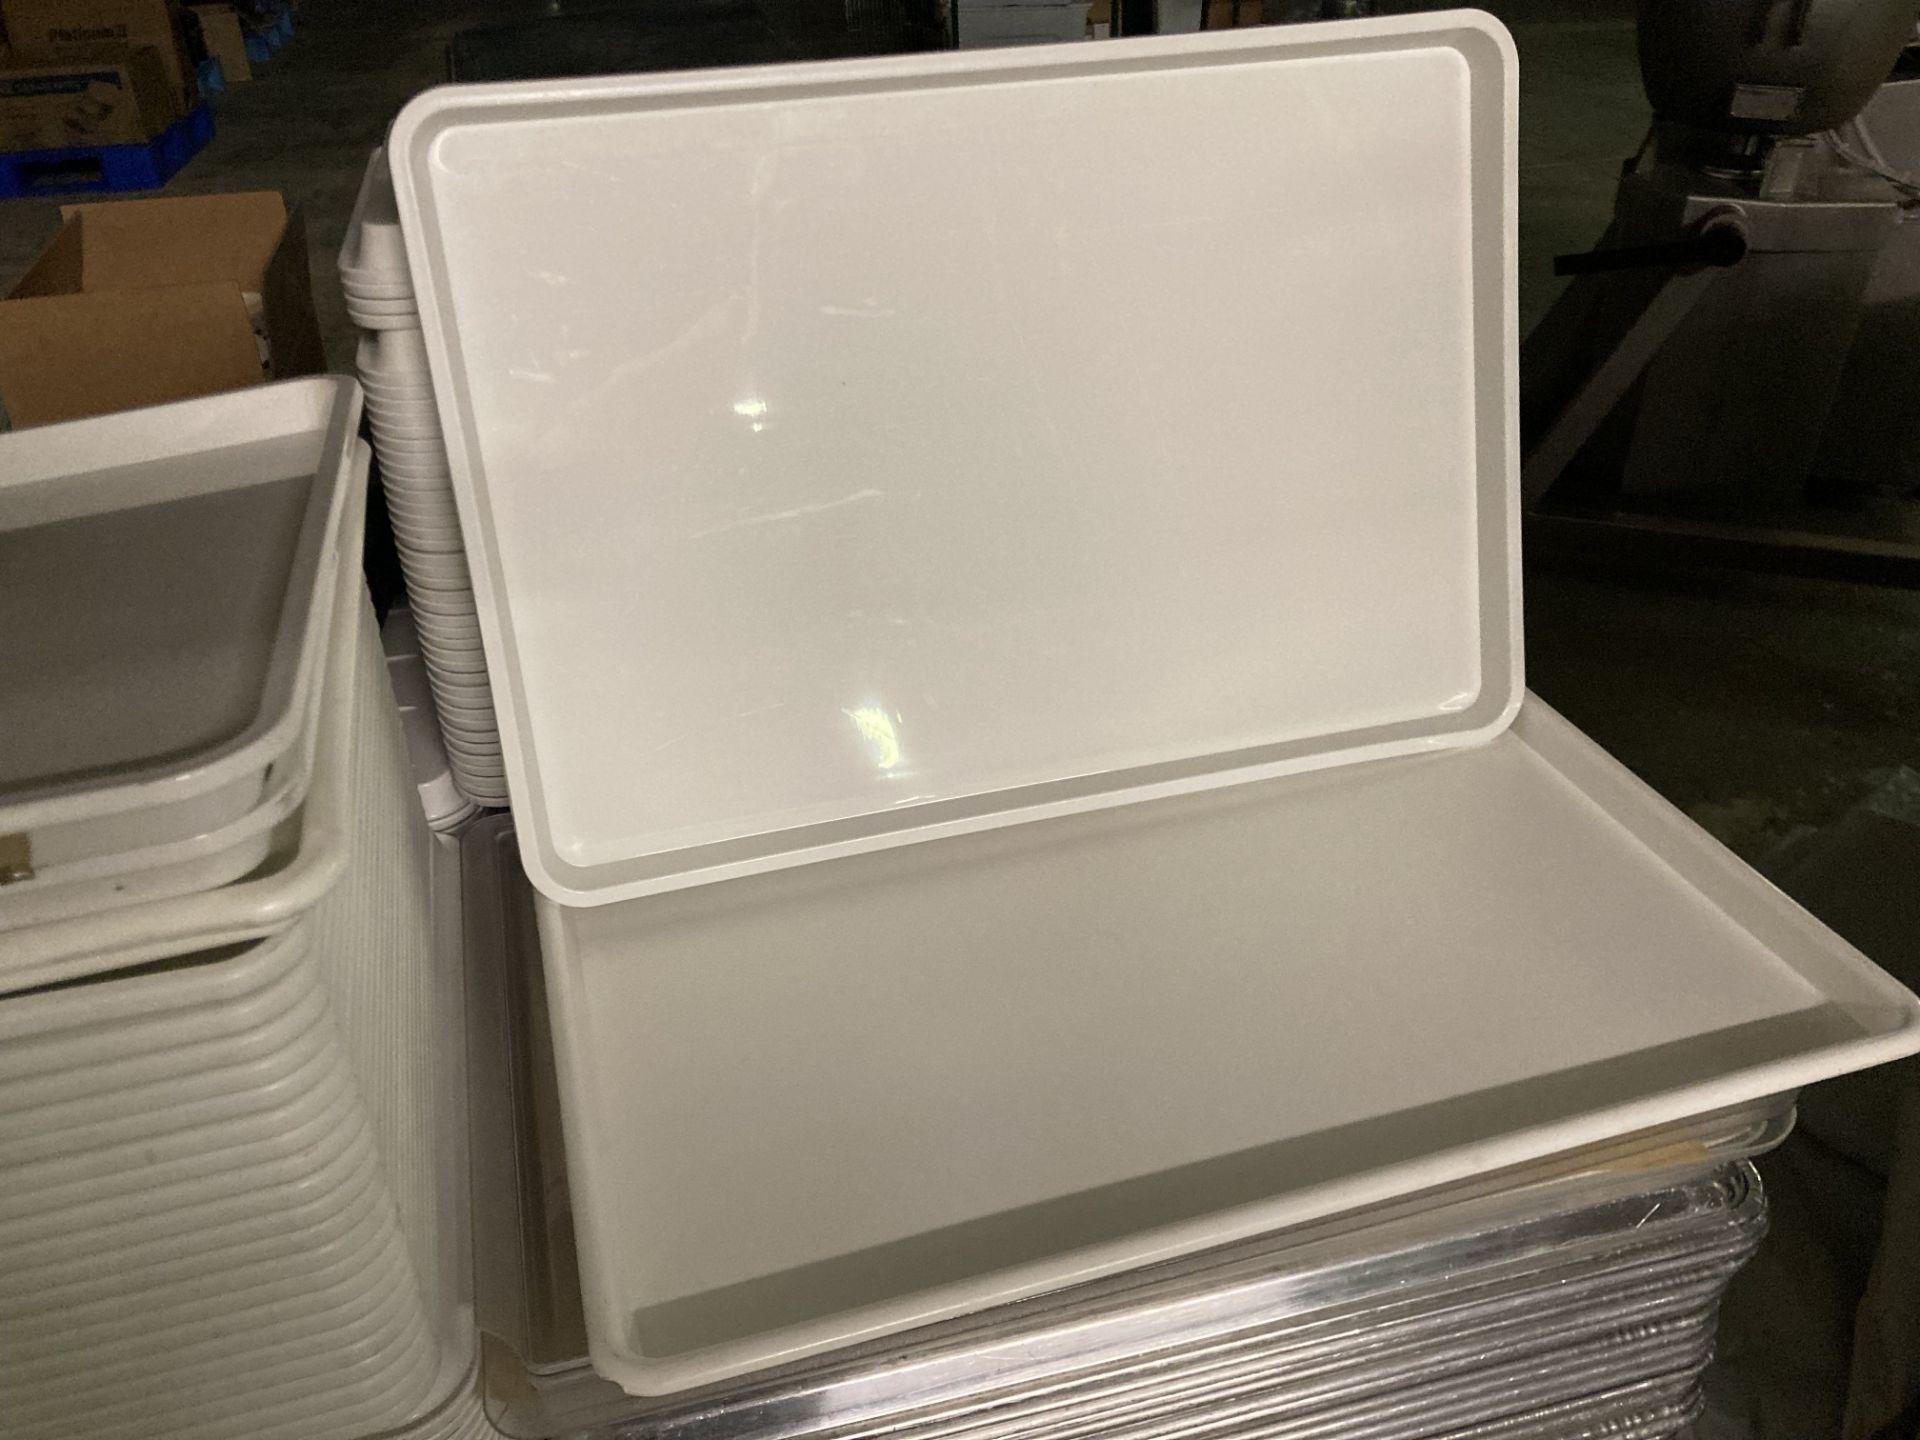 Omcan 14244 Plastic Sheet Trays. Lot of 100 plastic sheet trays. 18"x26", fits bakers racks, great